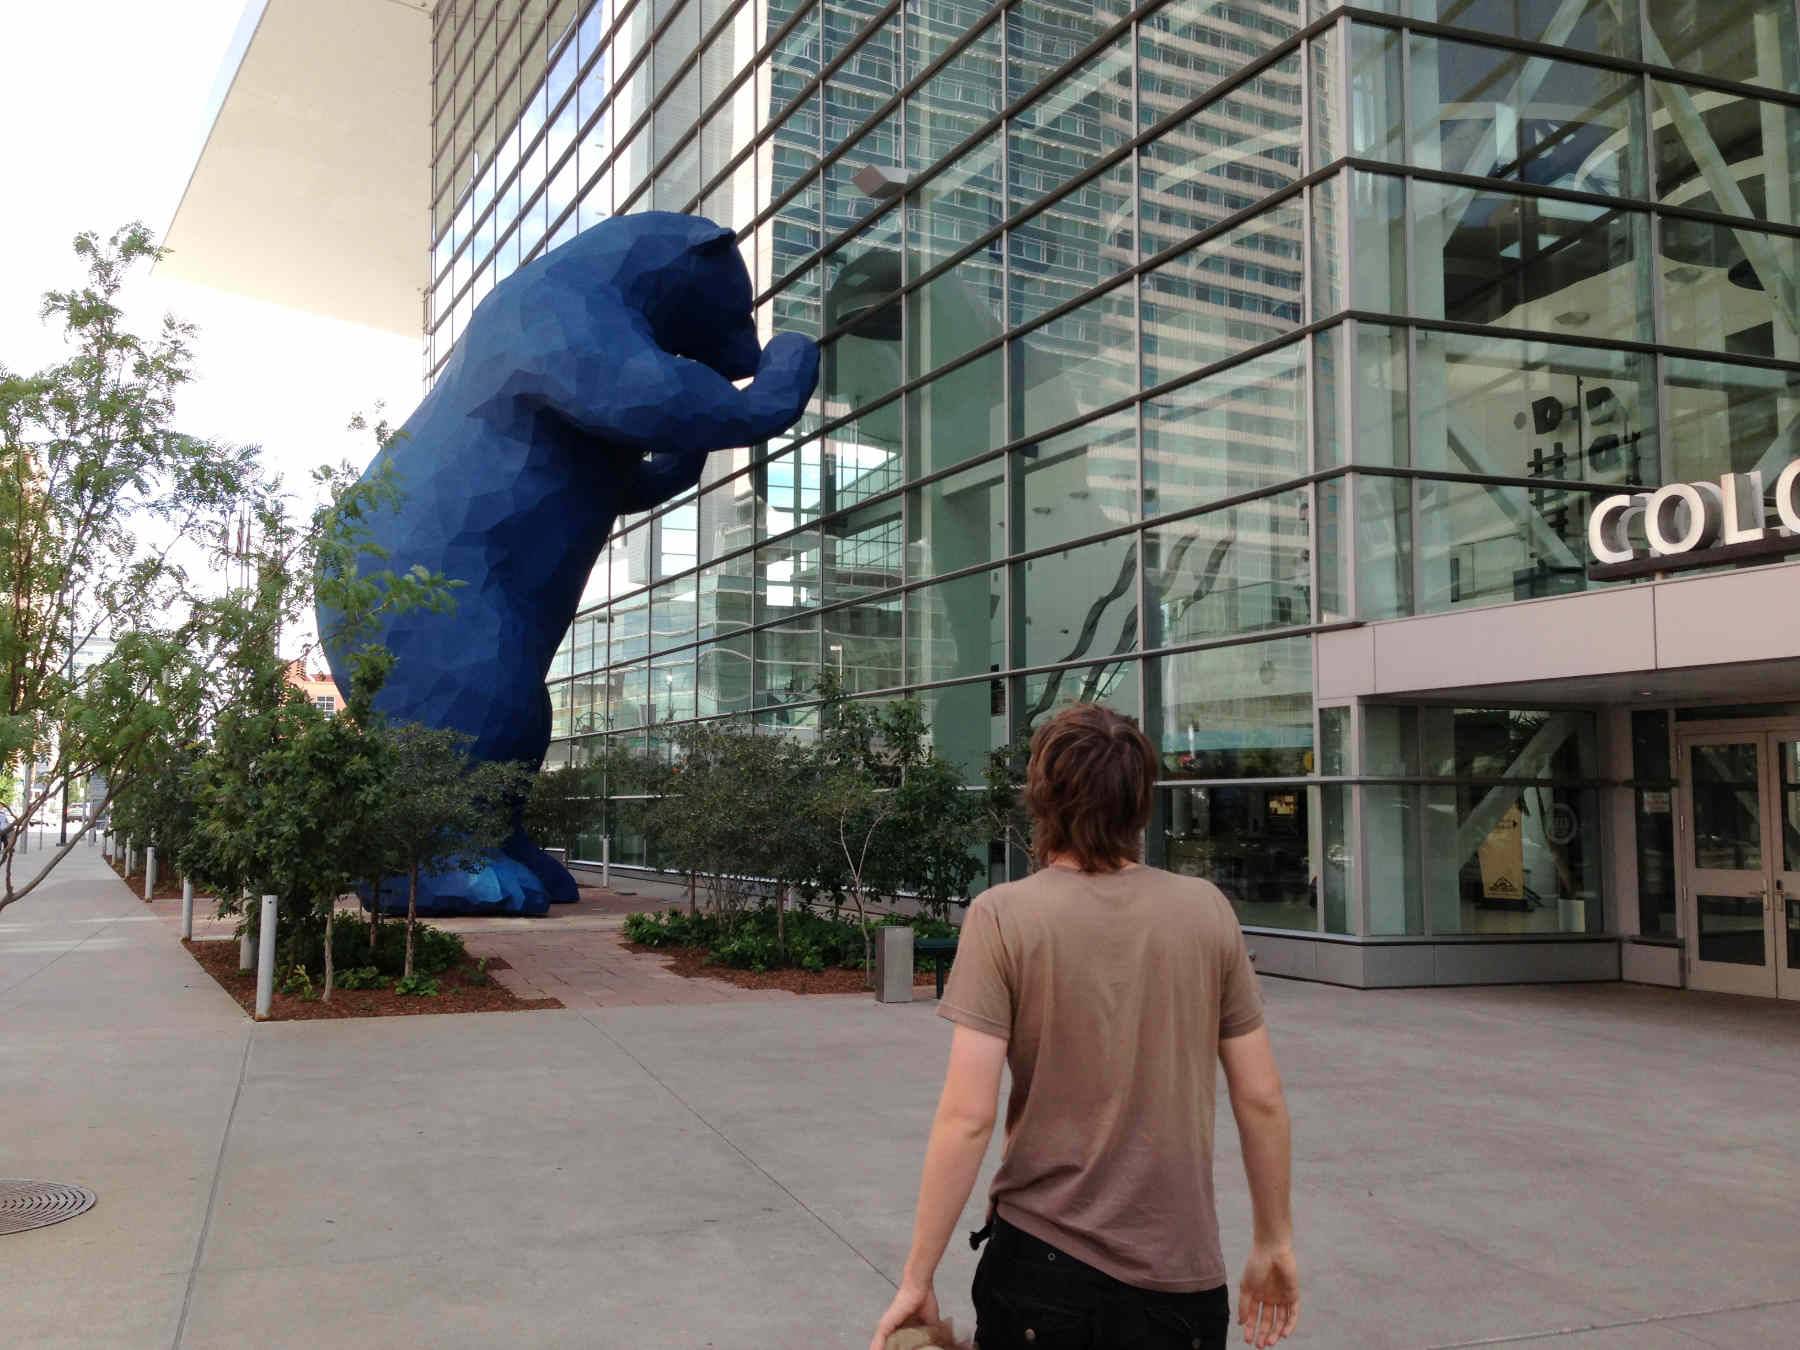 Butcher approaching the blue bear statue